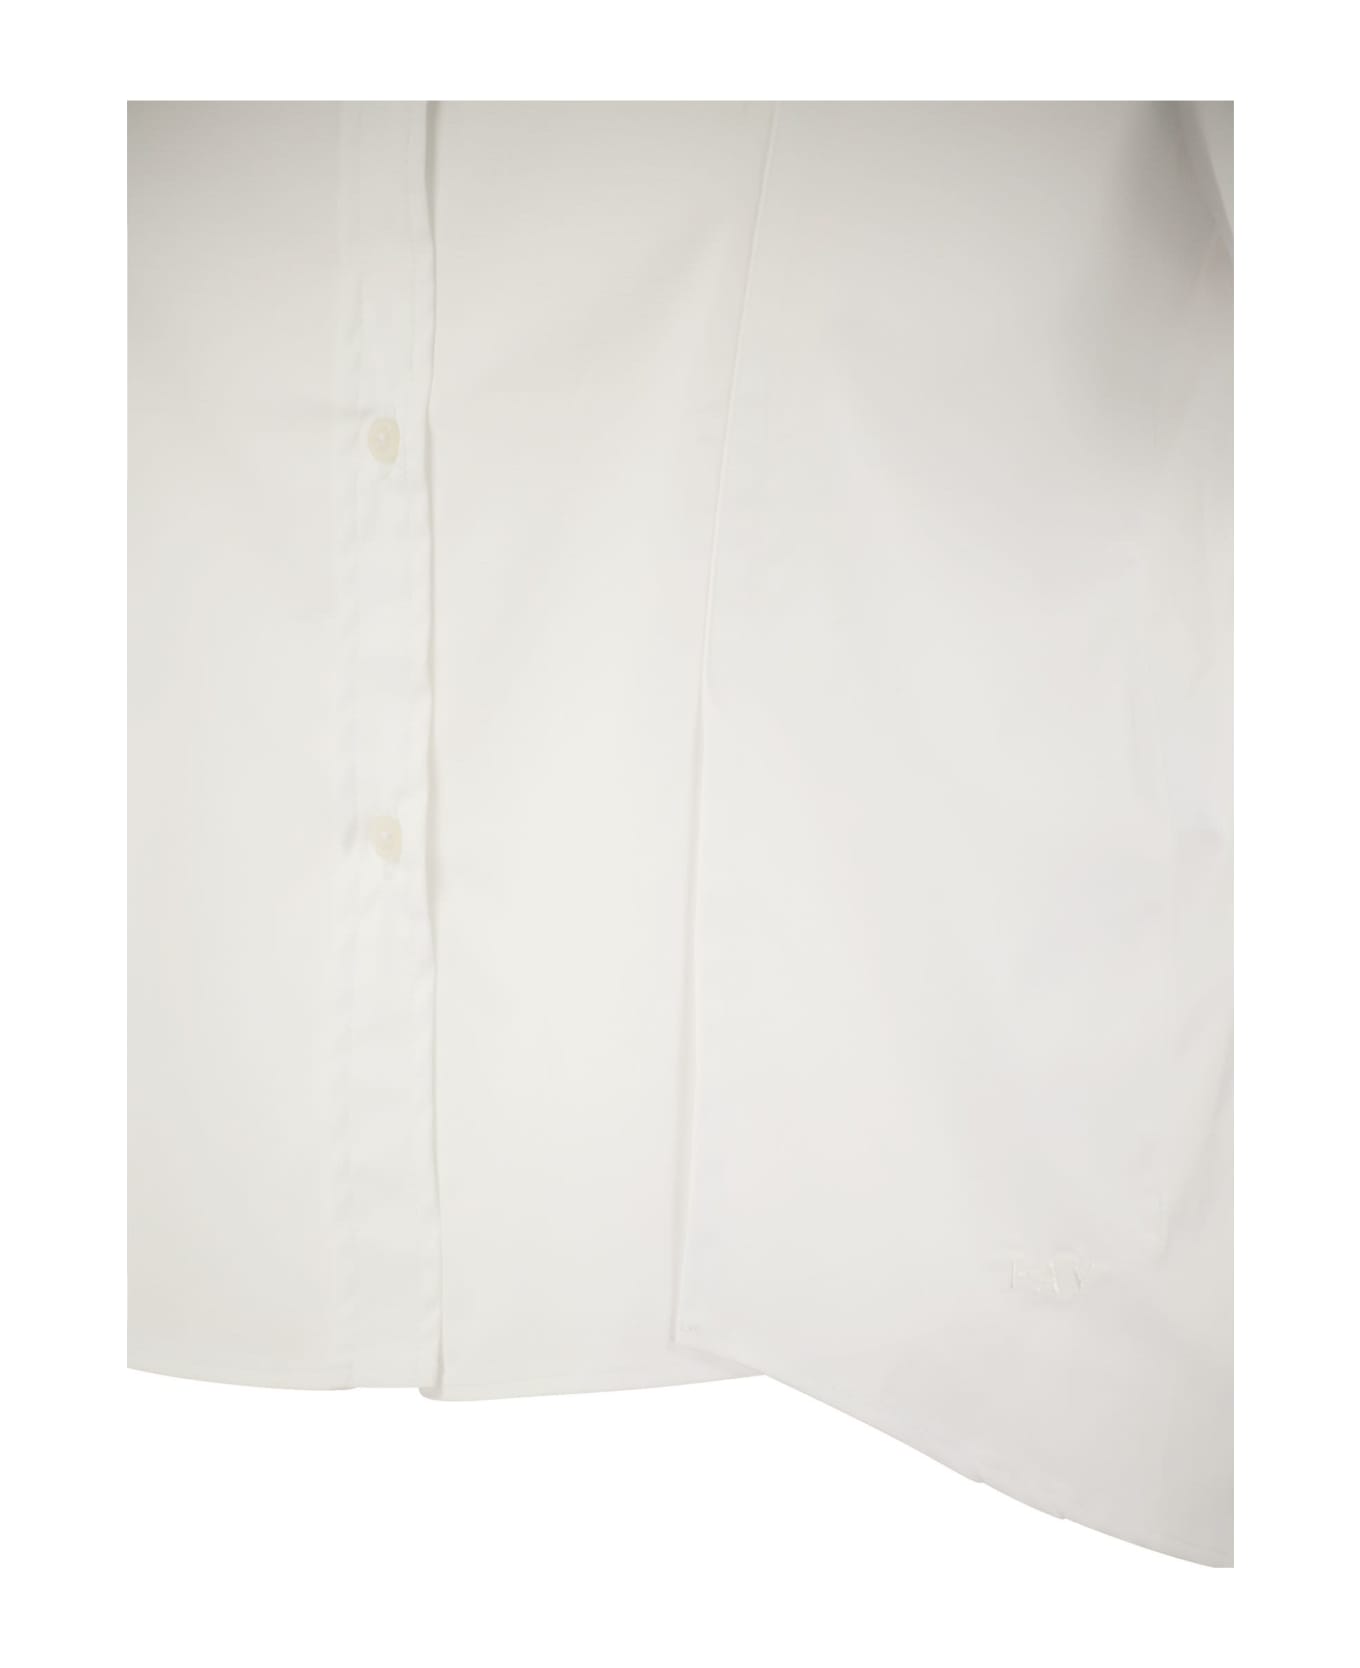 Fay Mandarin Collar Shirt - Bianco